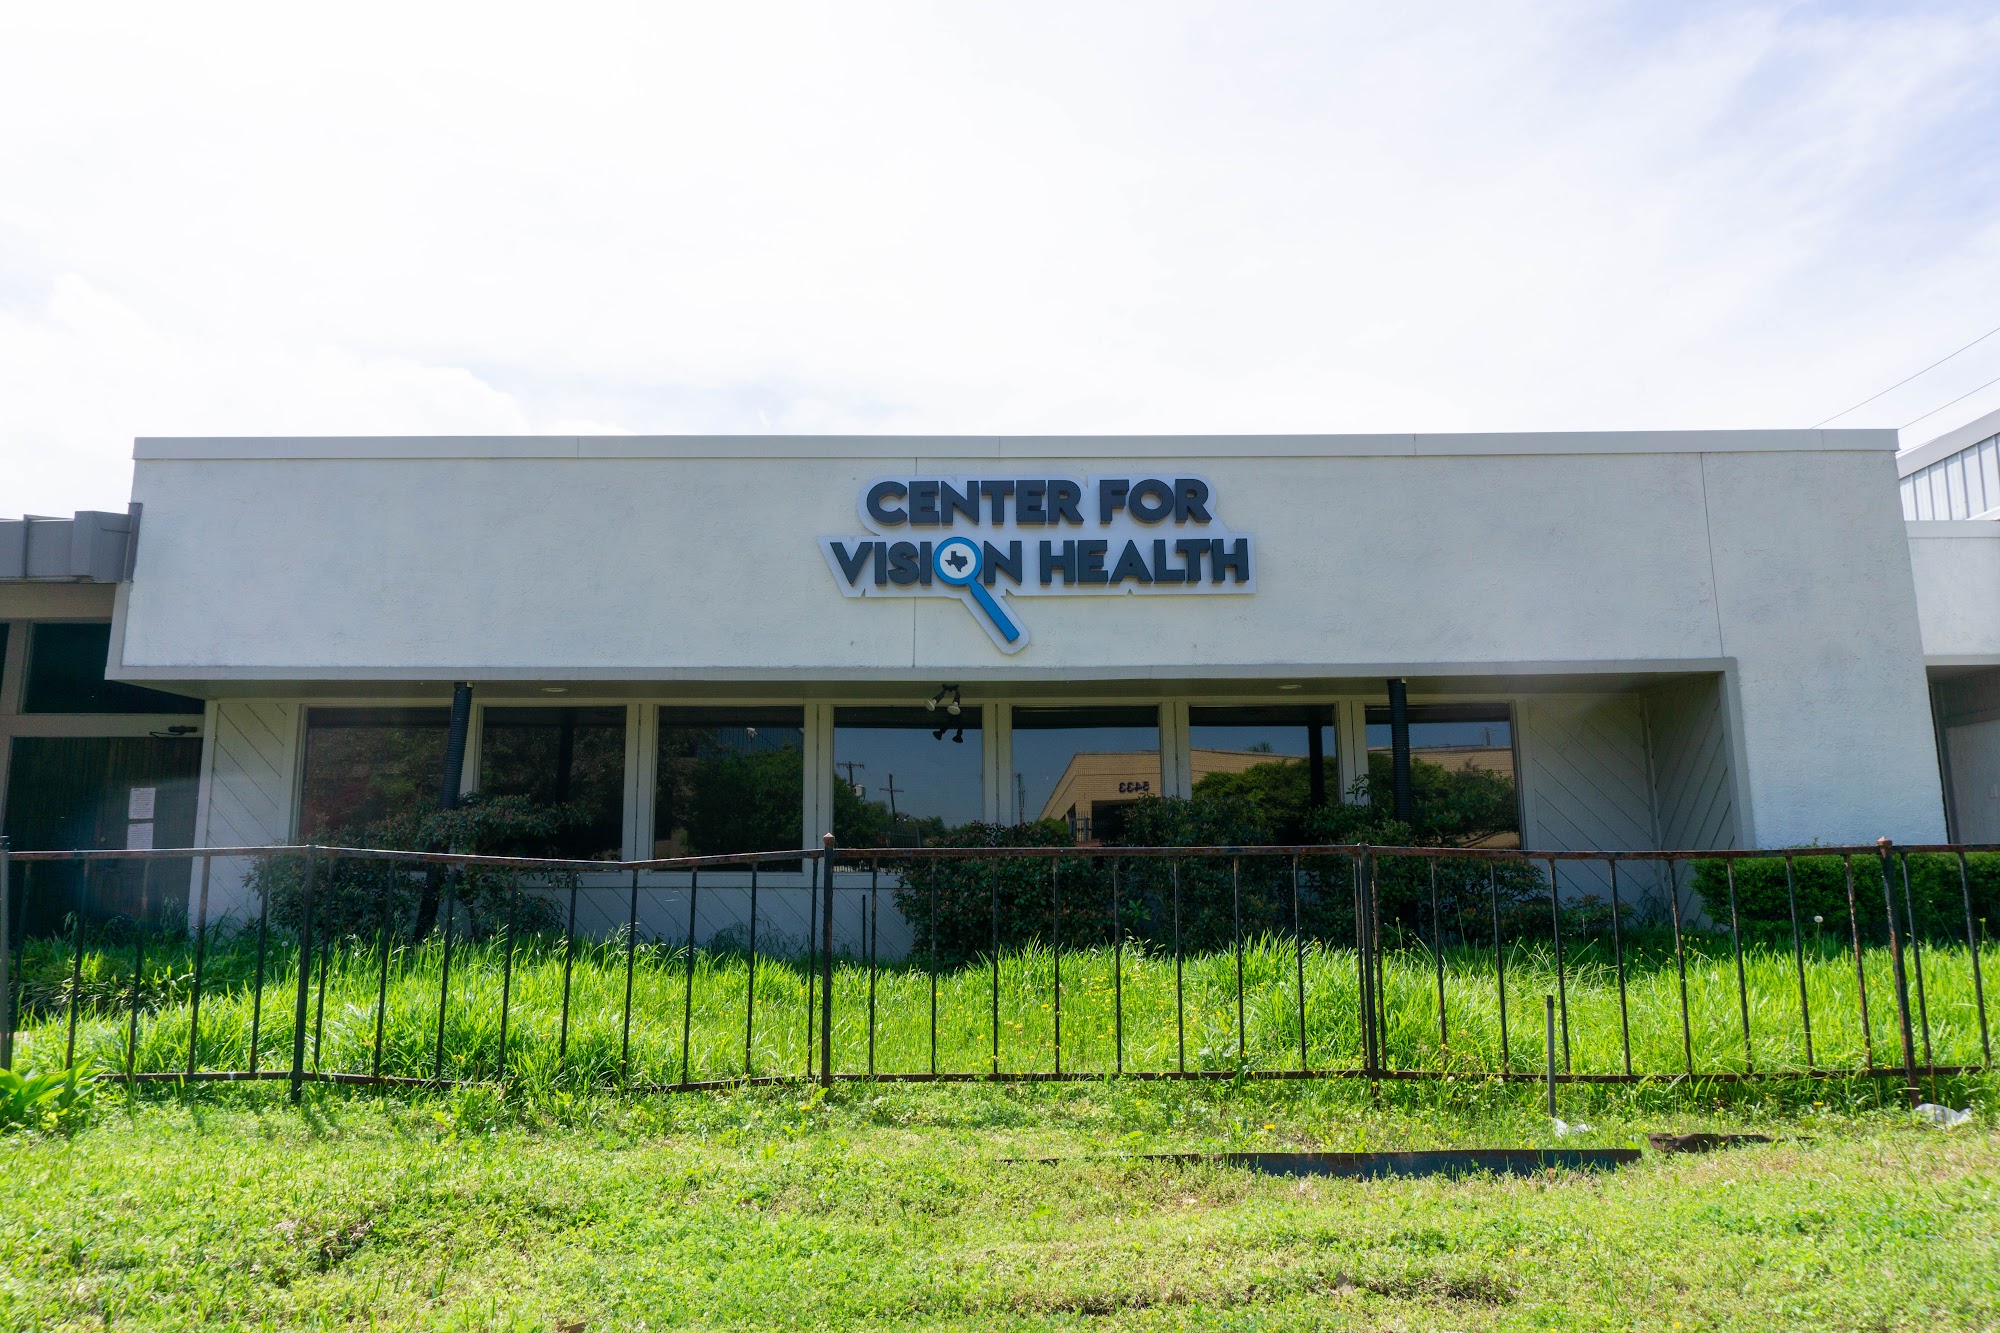 Center for Vision Health